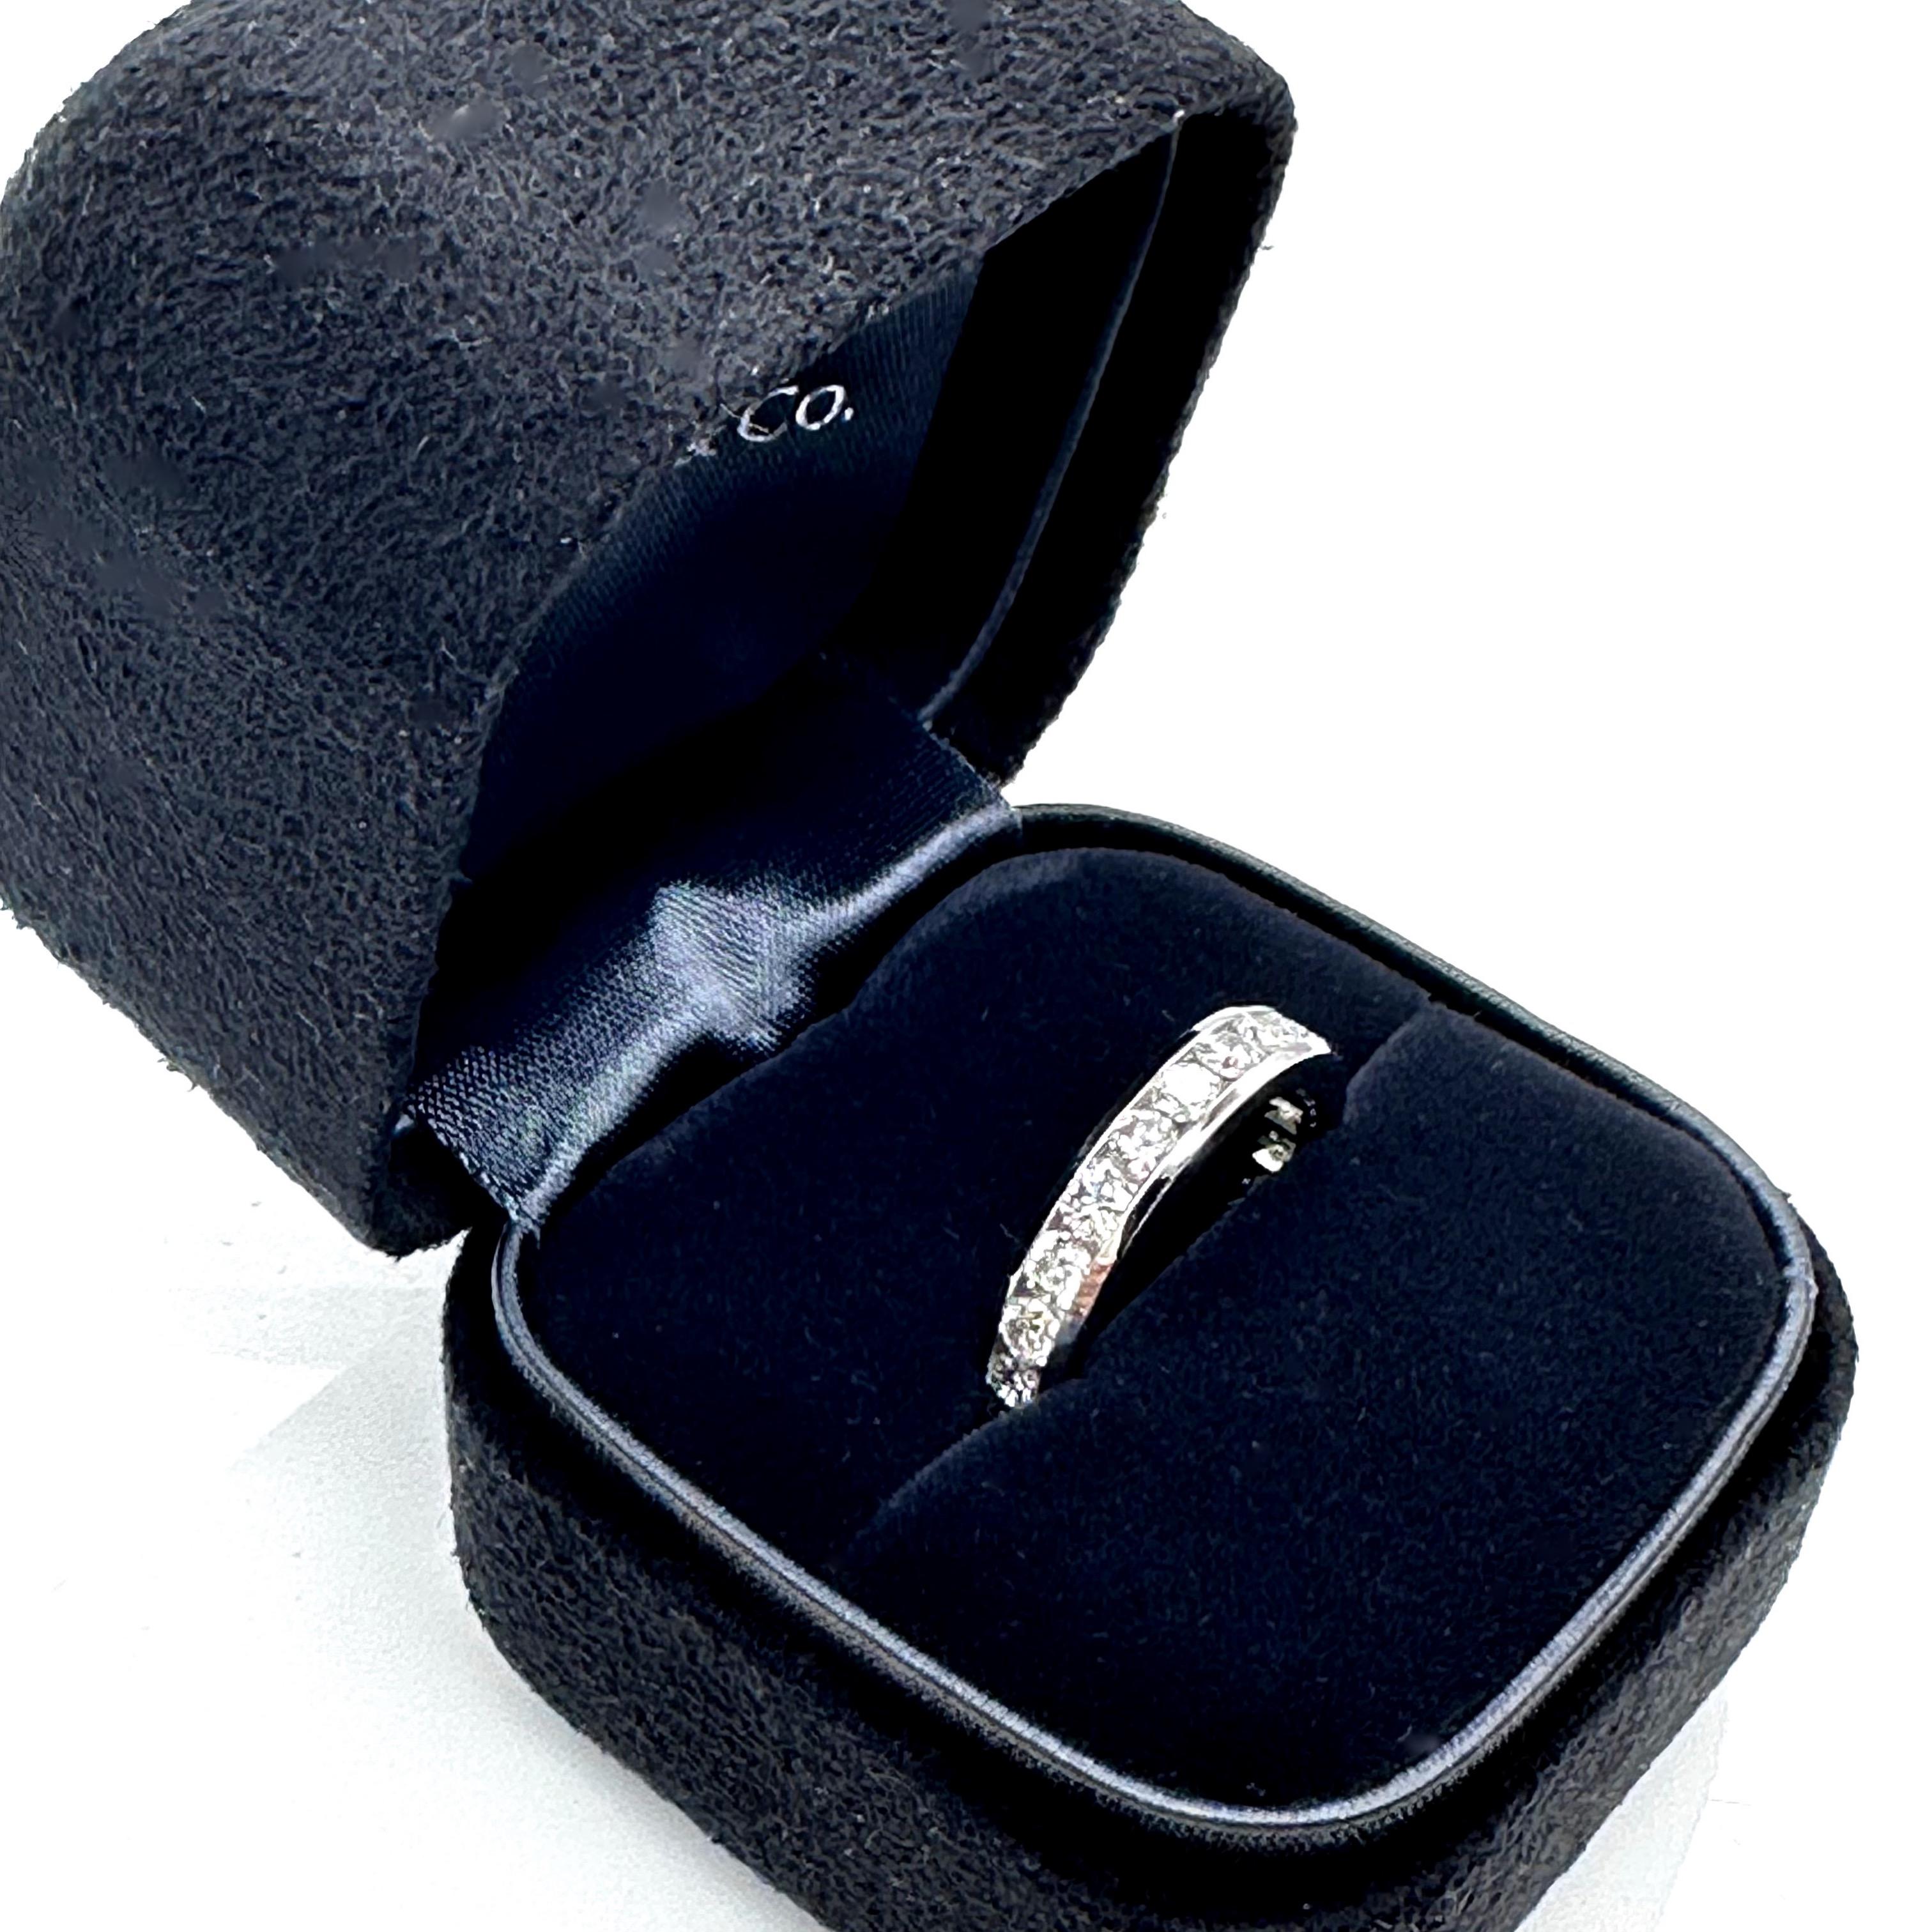 Tiffany & Co. Full Circle Channel Set 4 mm Wedding Band Ring
Style:  Channel-Set Full Circle
Ref. number:  6003428
Metal:  Platinum PT950
Size:  6.25
Width:  4 mm
TCW:  1.80 tcw
Main Diamond:  22 Round Brilliant Diamonds
Hallmark:  ©TIFFANY&CO.